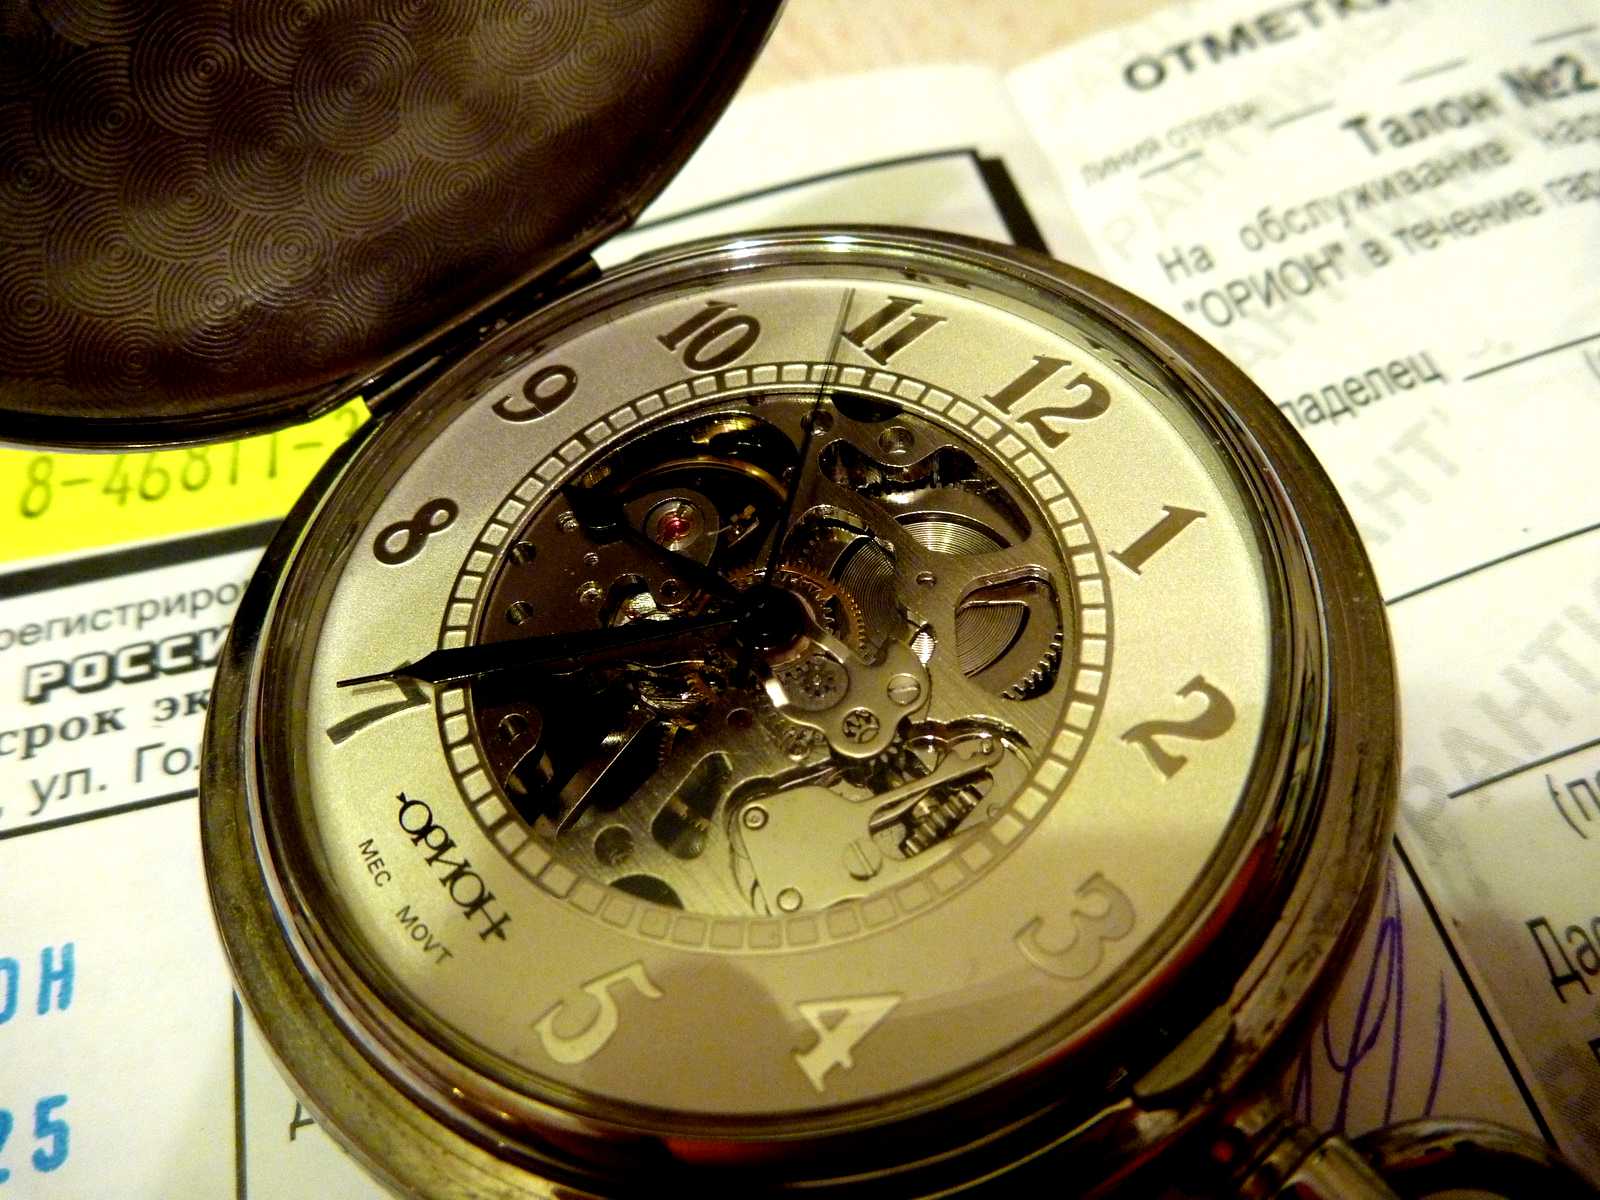 Часы Орион скелетон. Карманные часы Орион скелетон. Орион часы мужские карманные. Часы Орион скелетон 2002. 80 тысяч часов